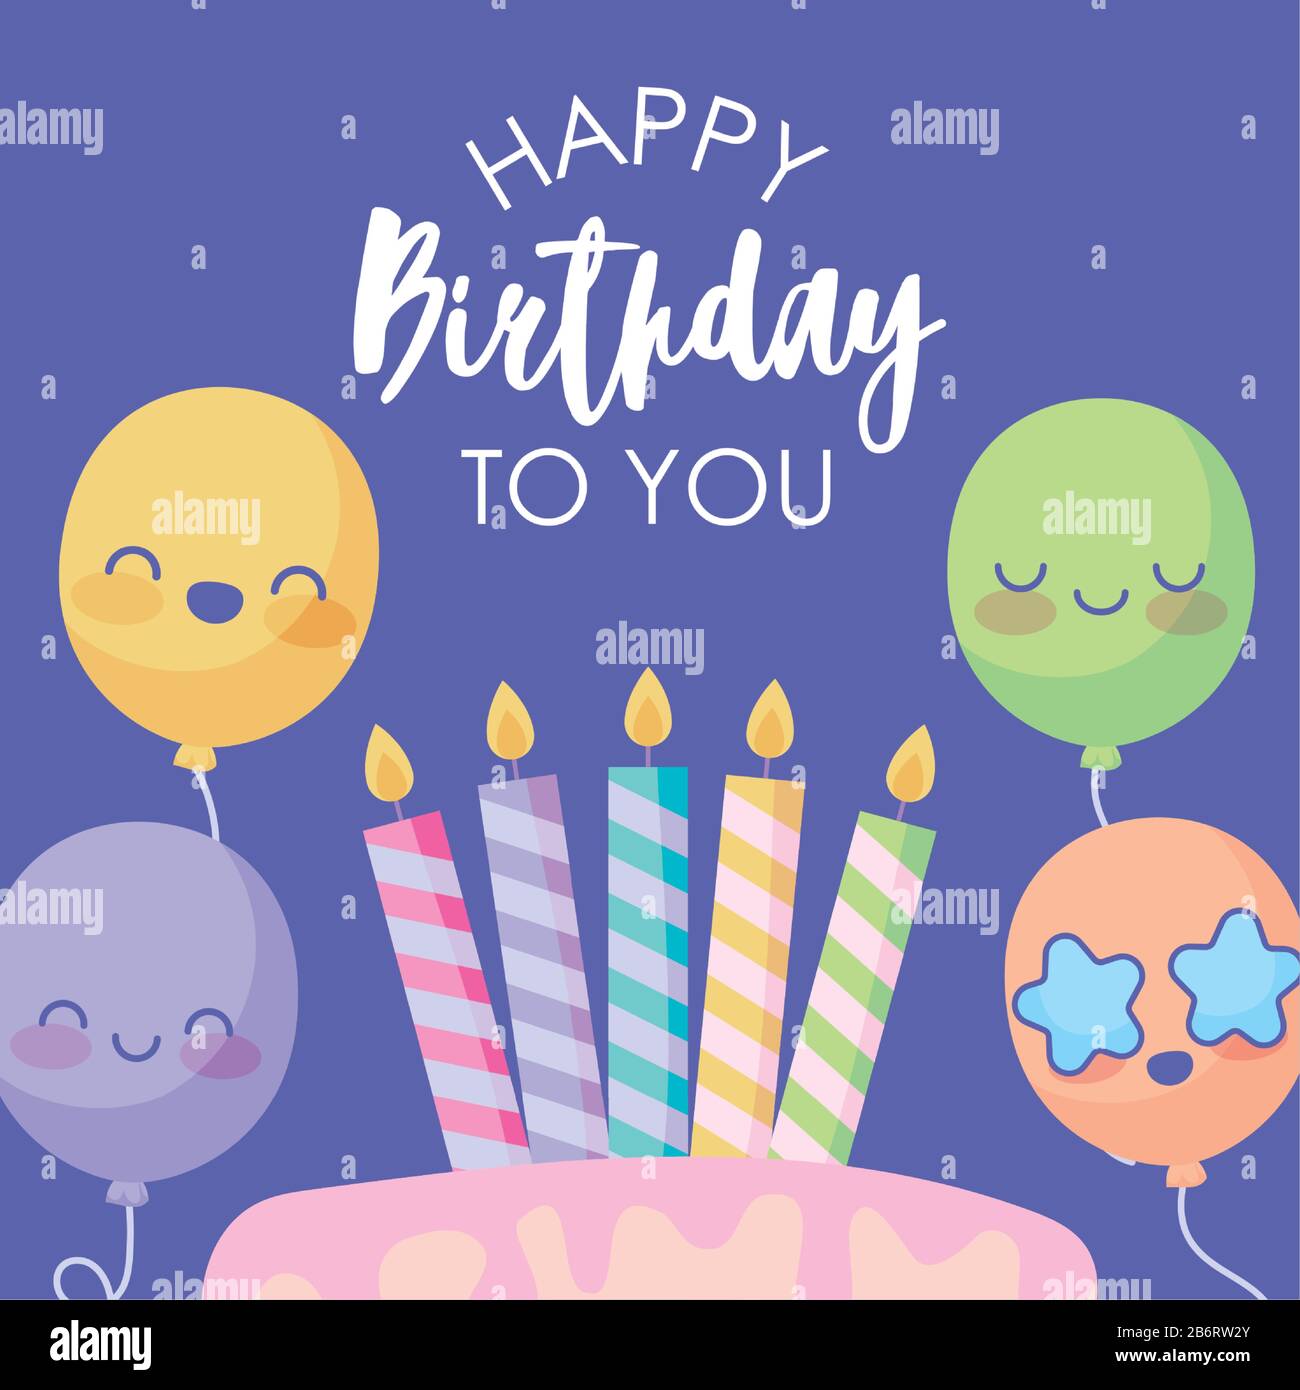 Happy birthday design with cute cartoon balloons and birthday ...